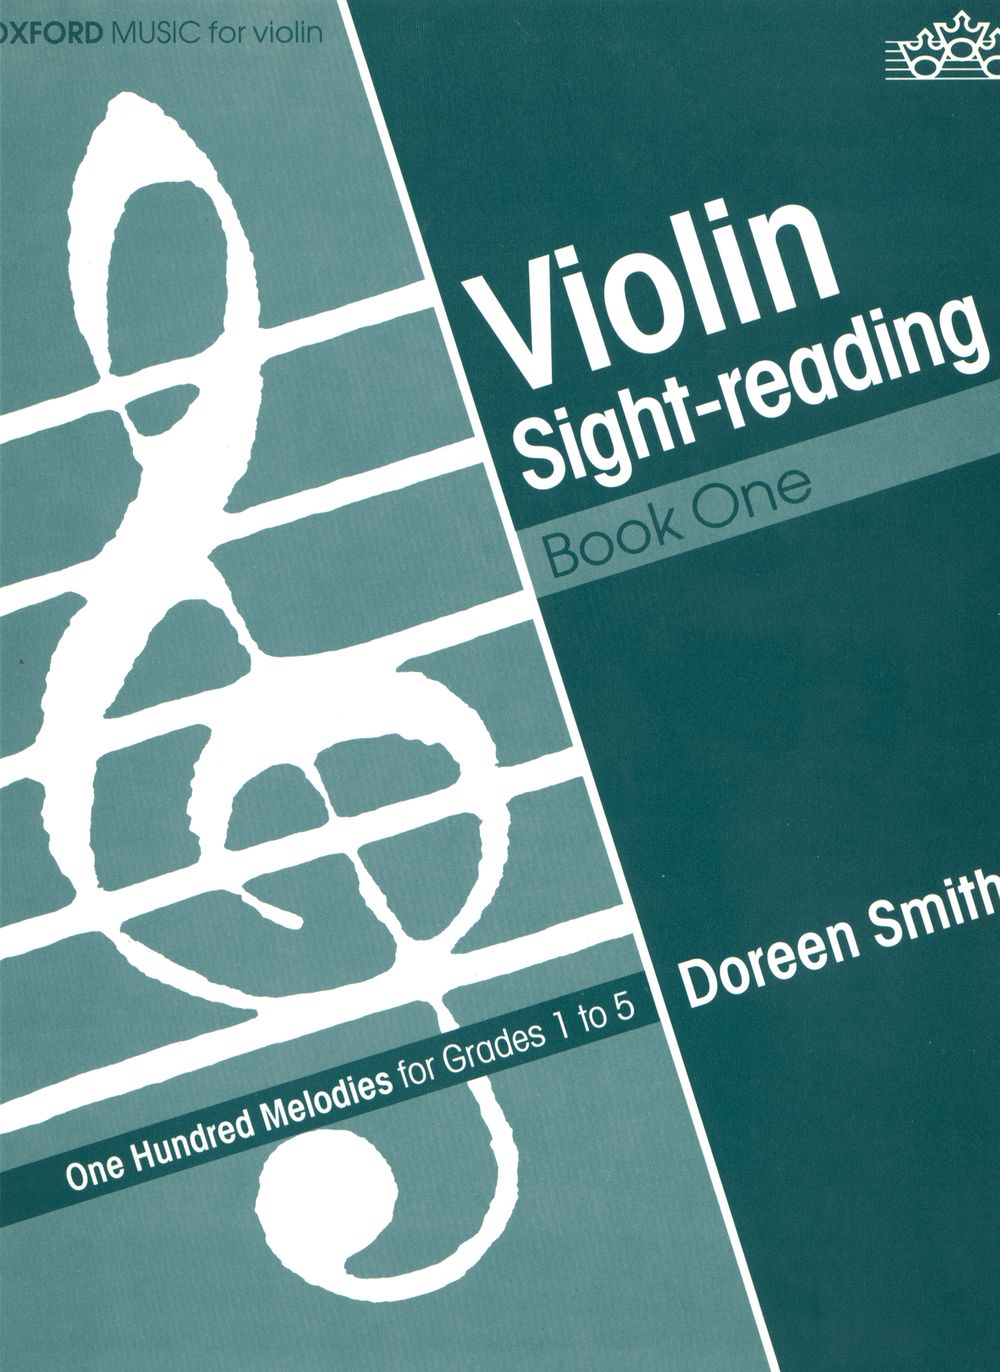 Violin Sight-reading Book 1 Grades 1-5 Smith Sheet Music Songbook